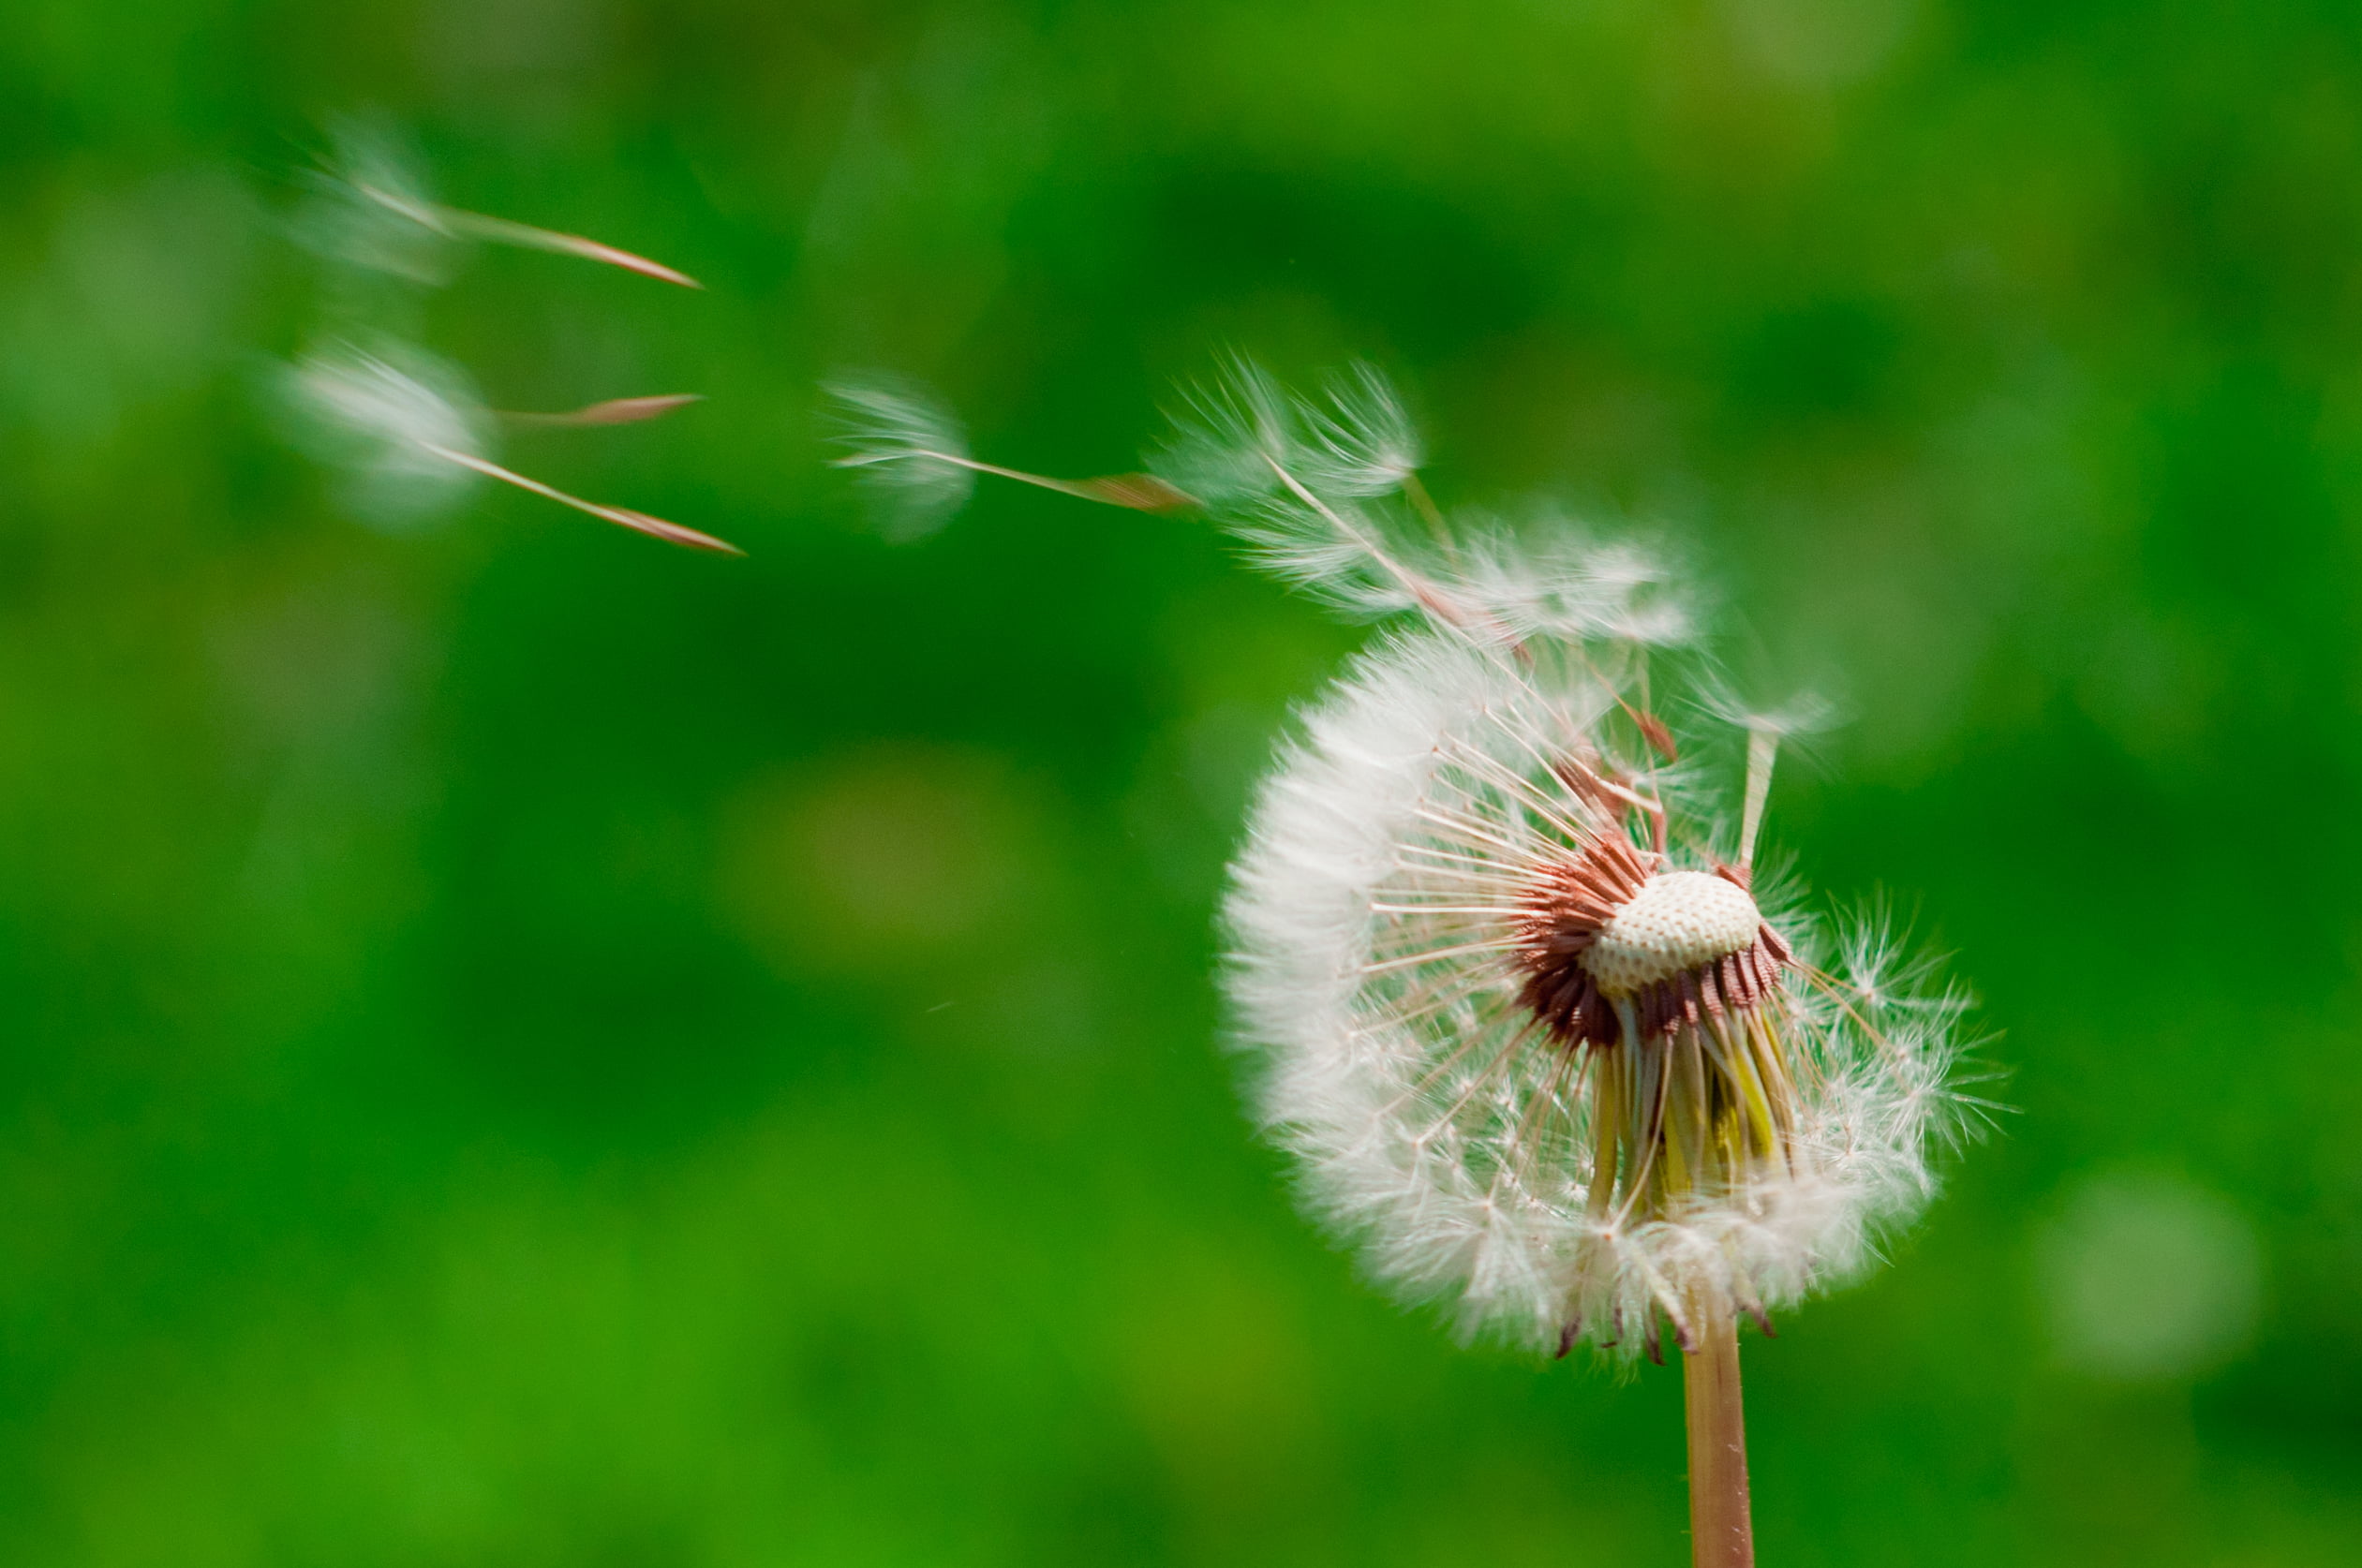 wind blowing dandelion buds in selective focus photography, dandelion